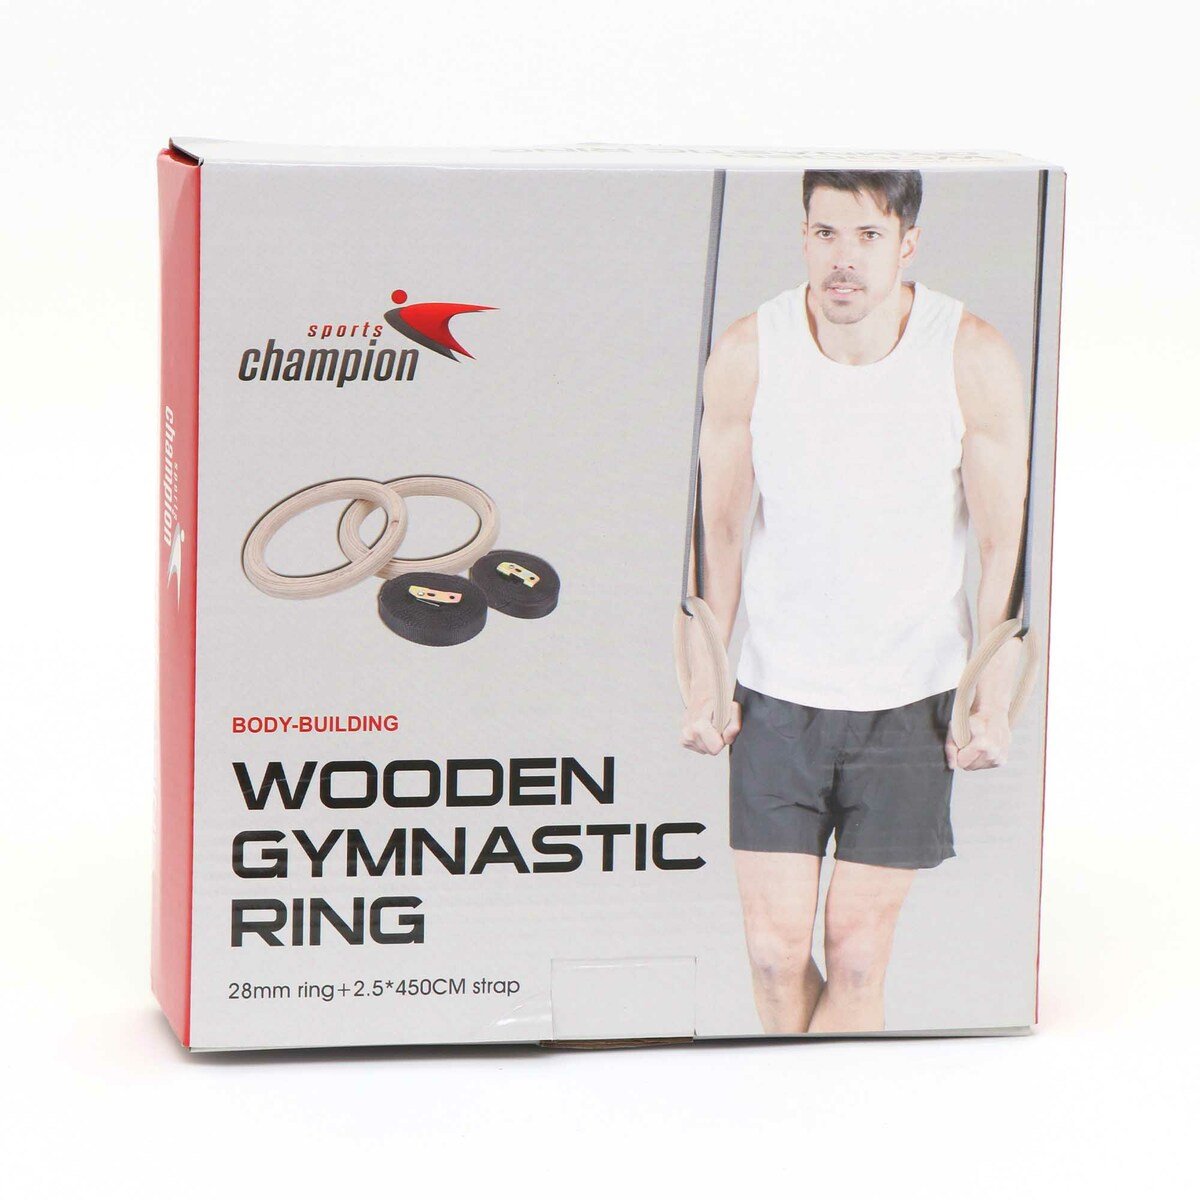 Sports Champion Wooden Gymnastic Ring 28mm+2.5x450cm Strap VF97654